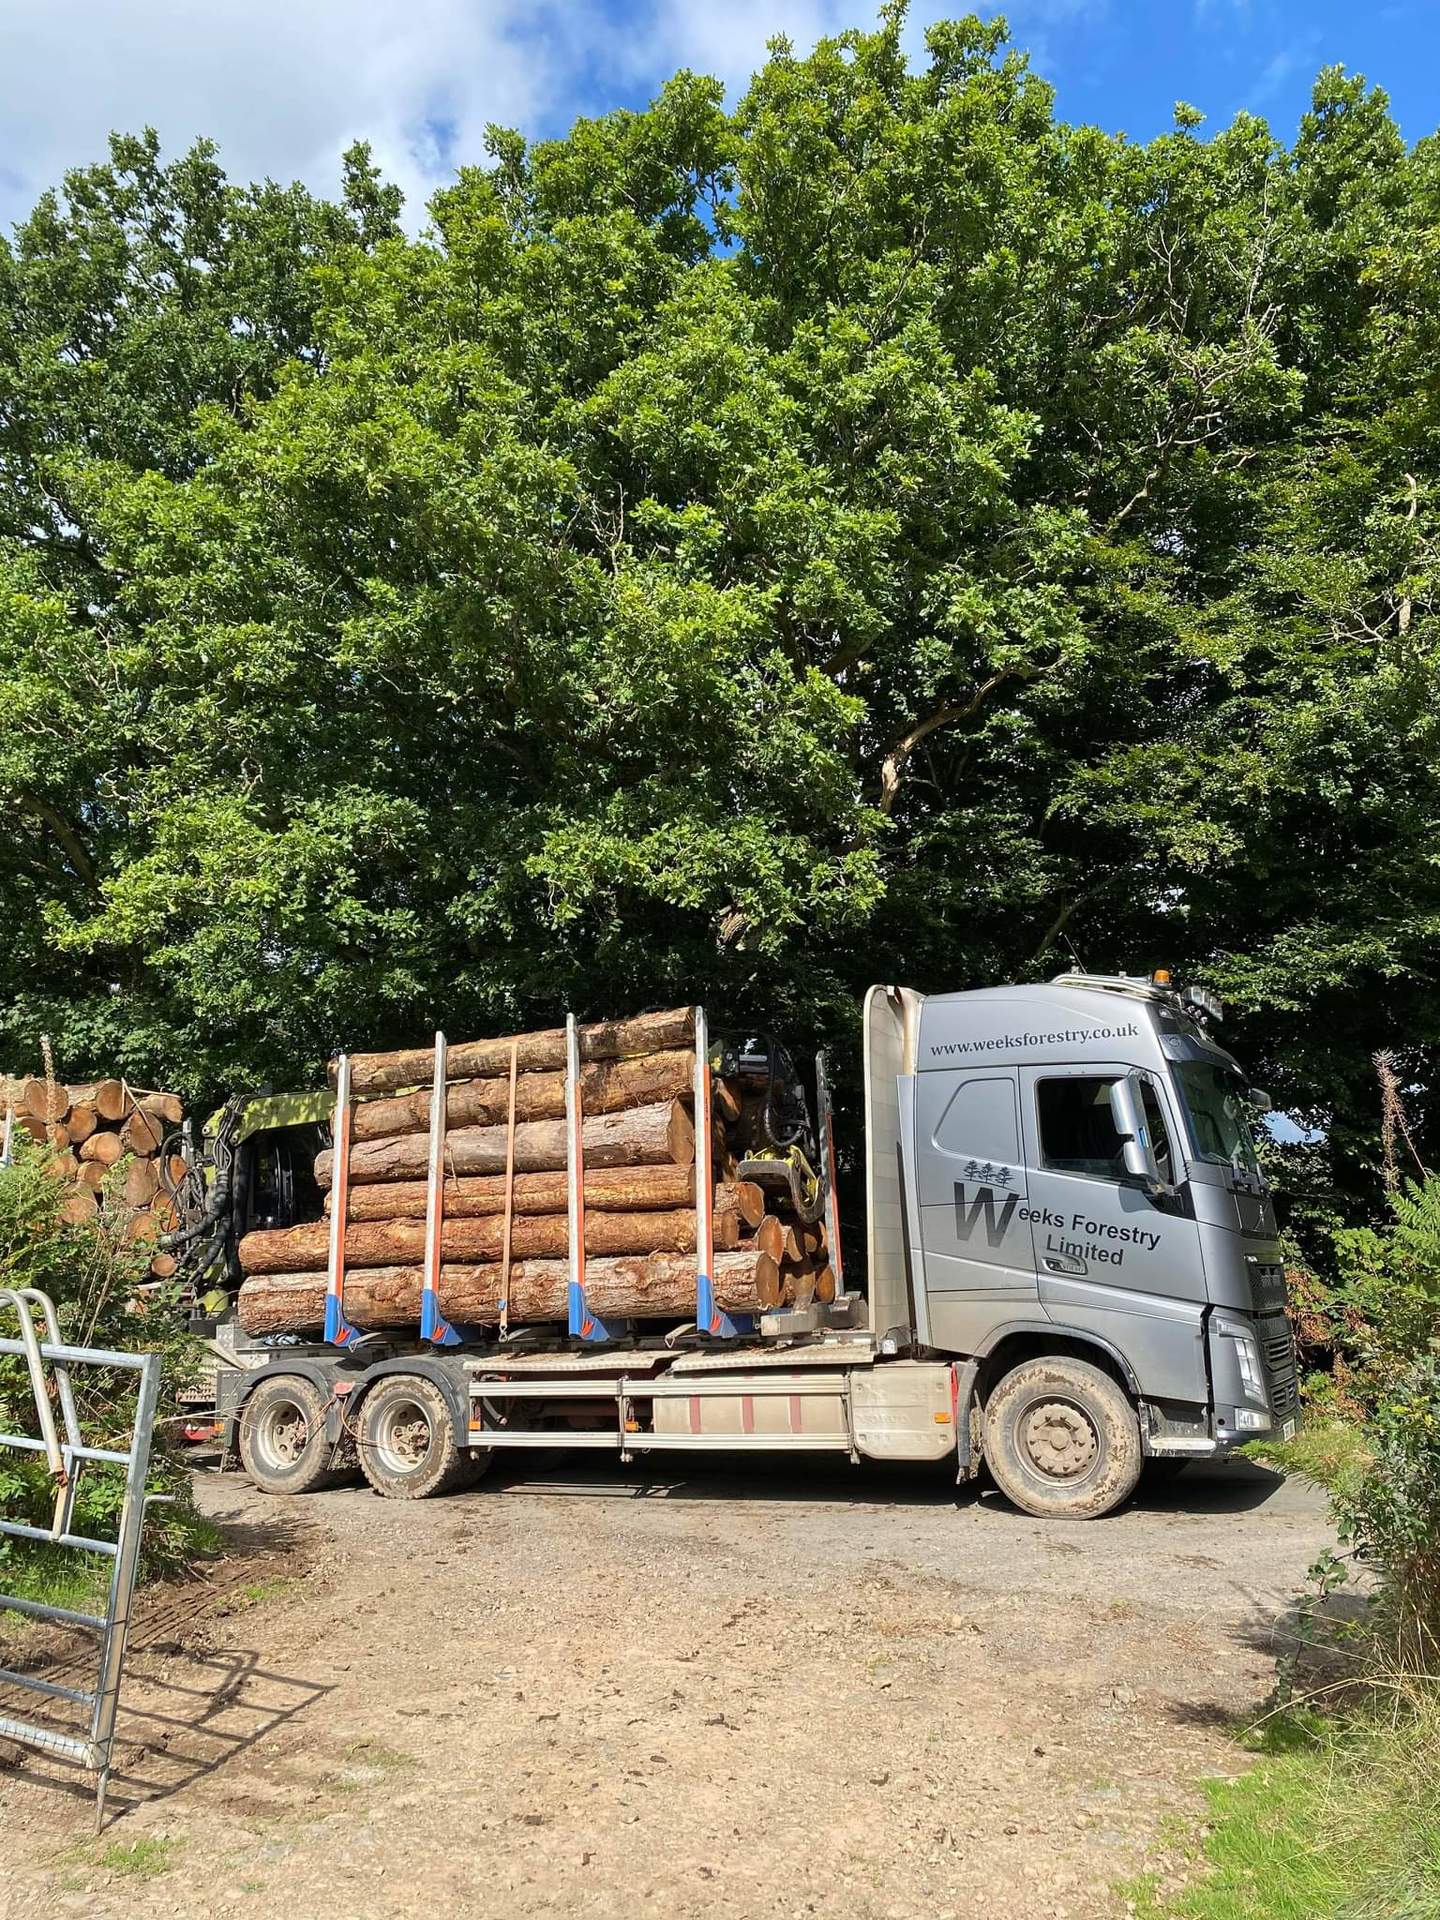 Timber haulage